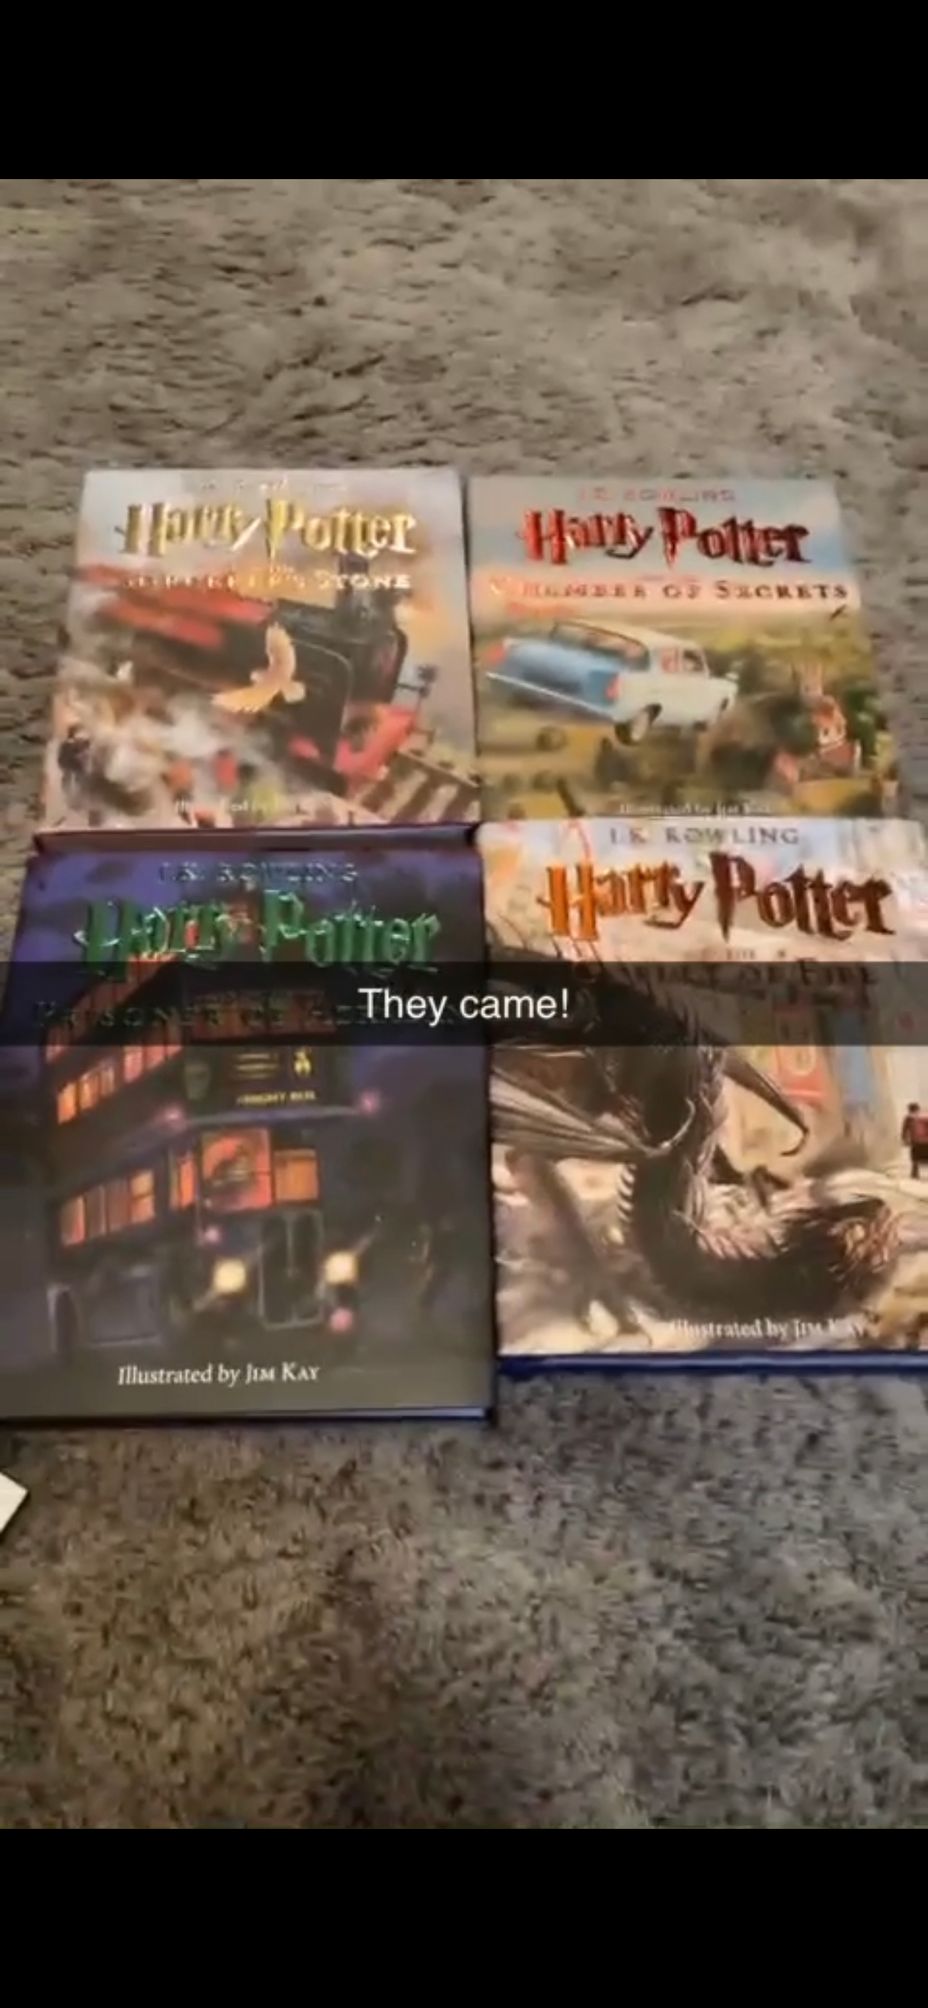 <p>Harry Potter makes me happy</p>